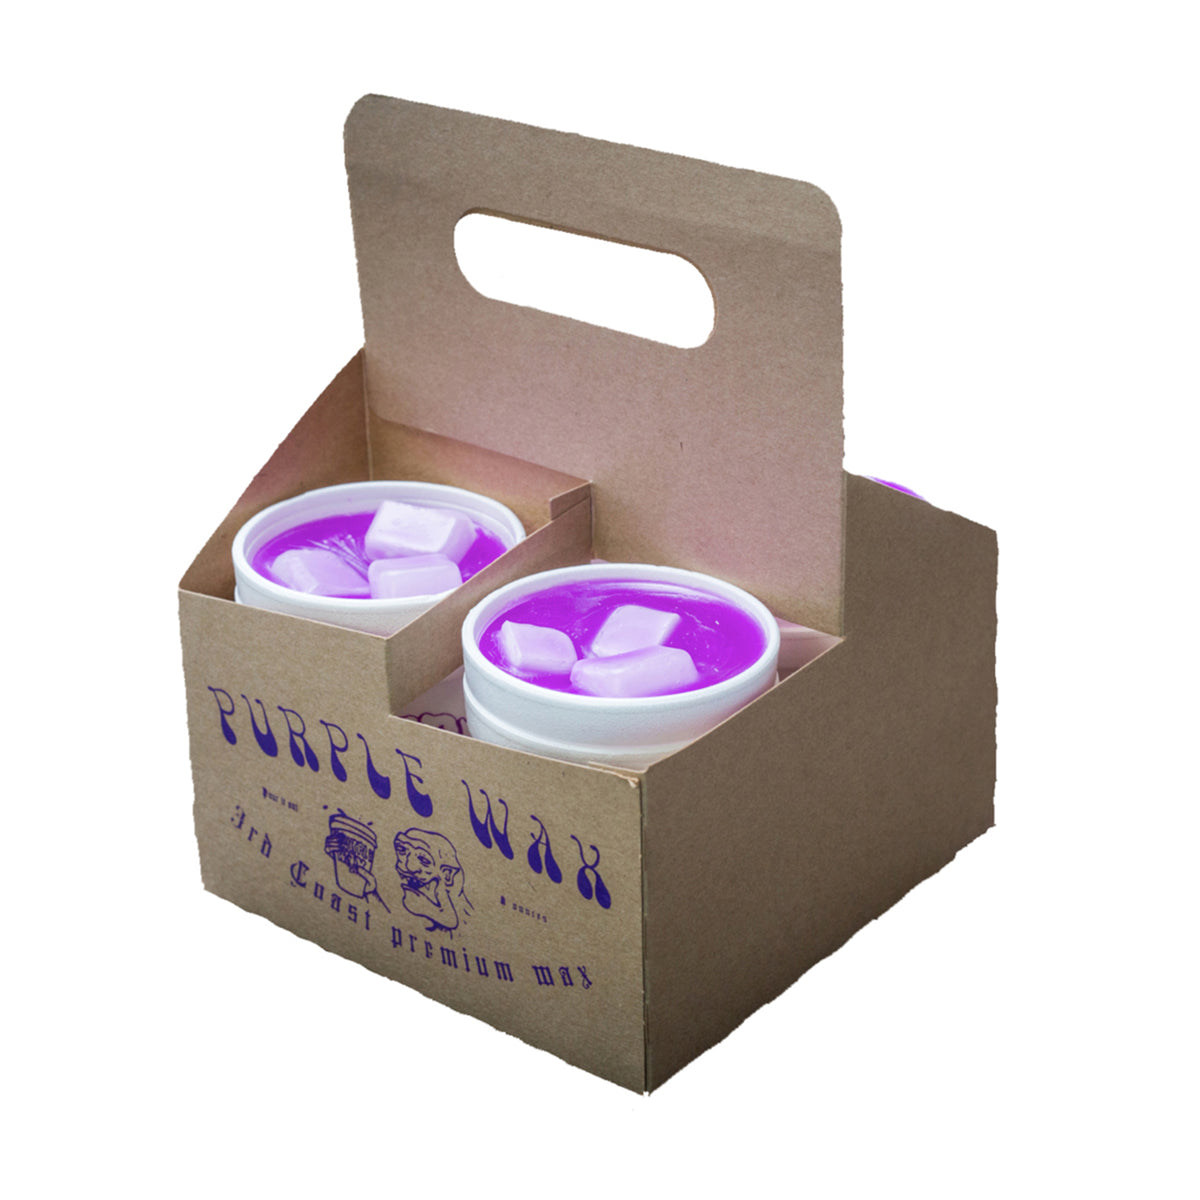 Purple Premium Finishing Wax – Tomahawk USA